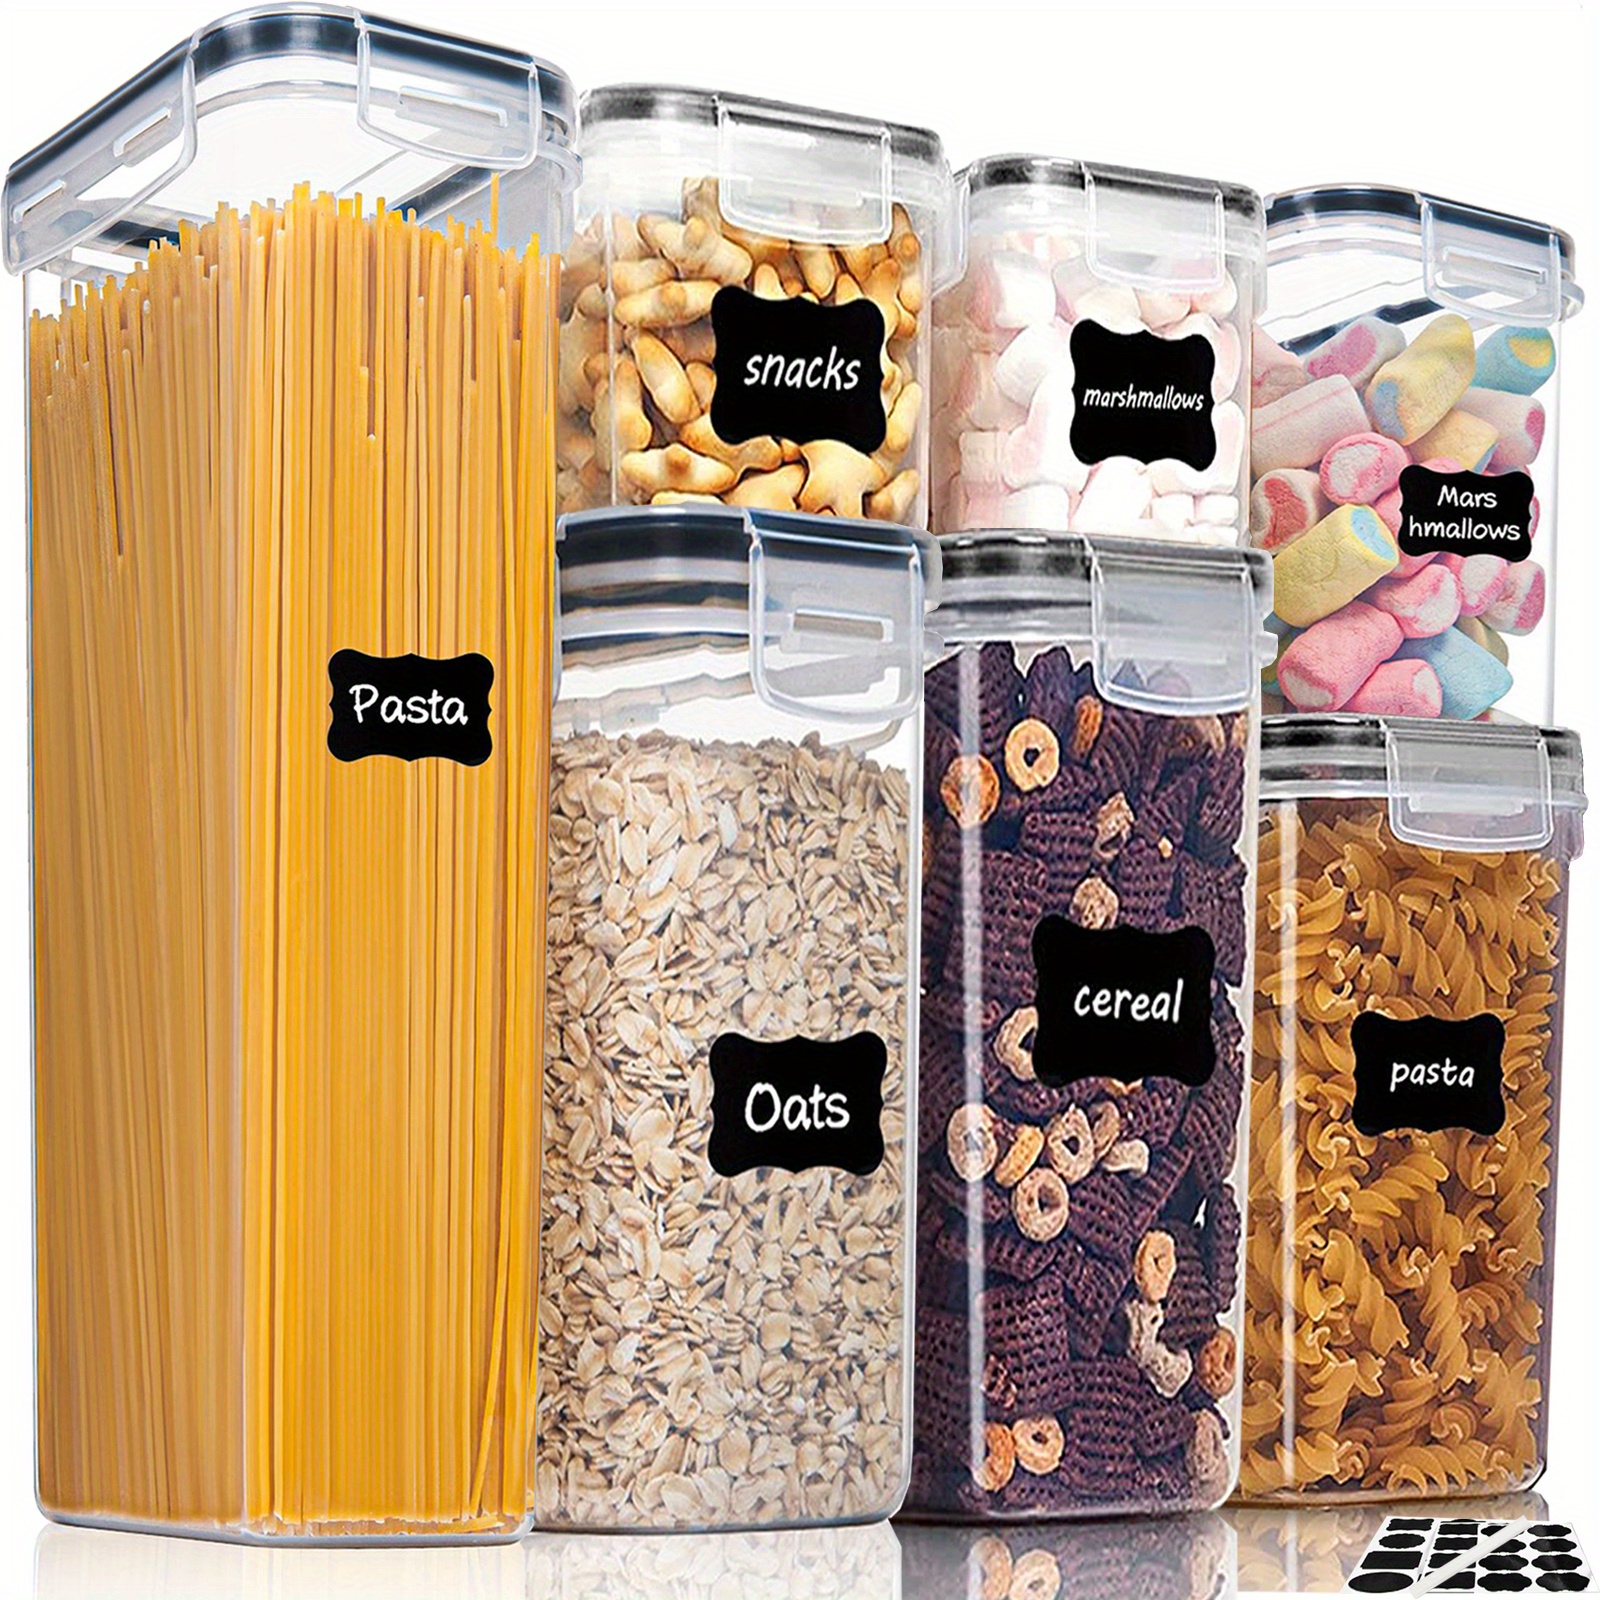 Vtopmart Clear Plastic Pantry Organizer Bins, 14 PCS Food Storage